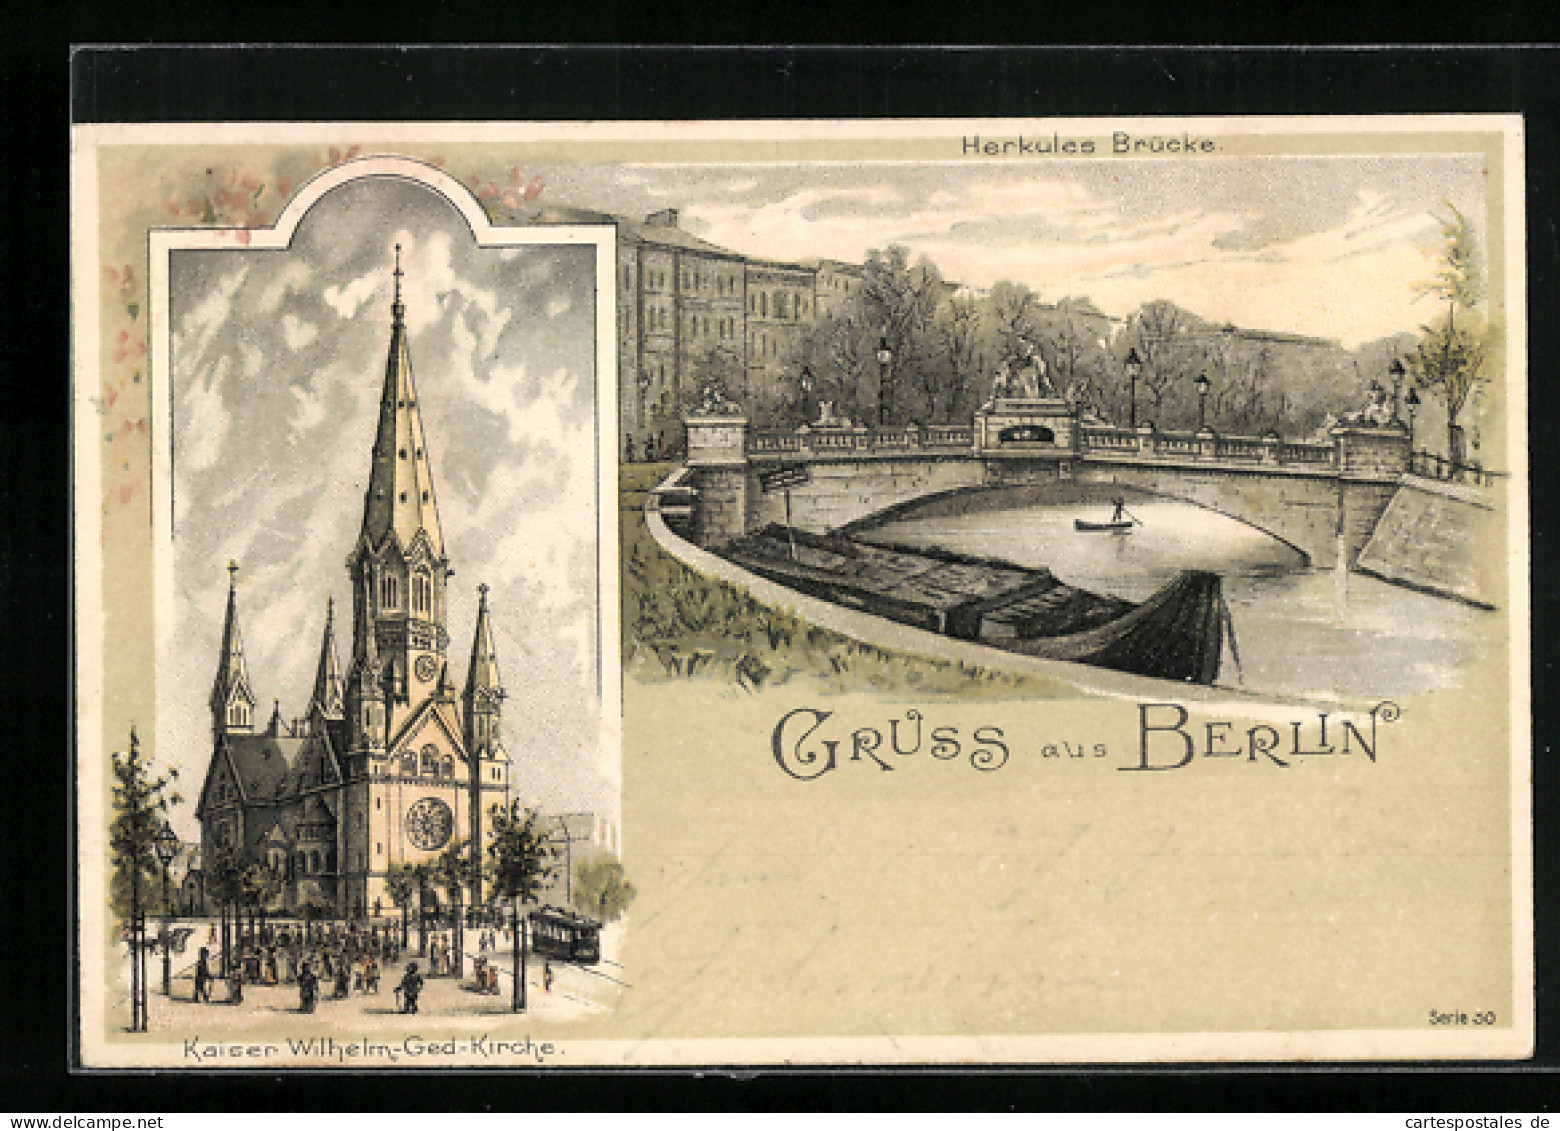 Lithographie Berlin, Herkules-Brücke, Kaiser Wilhelm Gedächtnis-Kirche  - Tiergarten